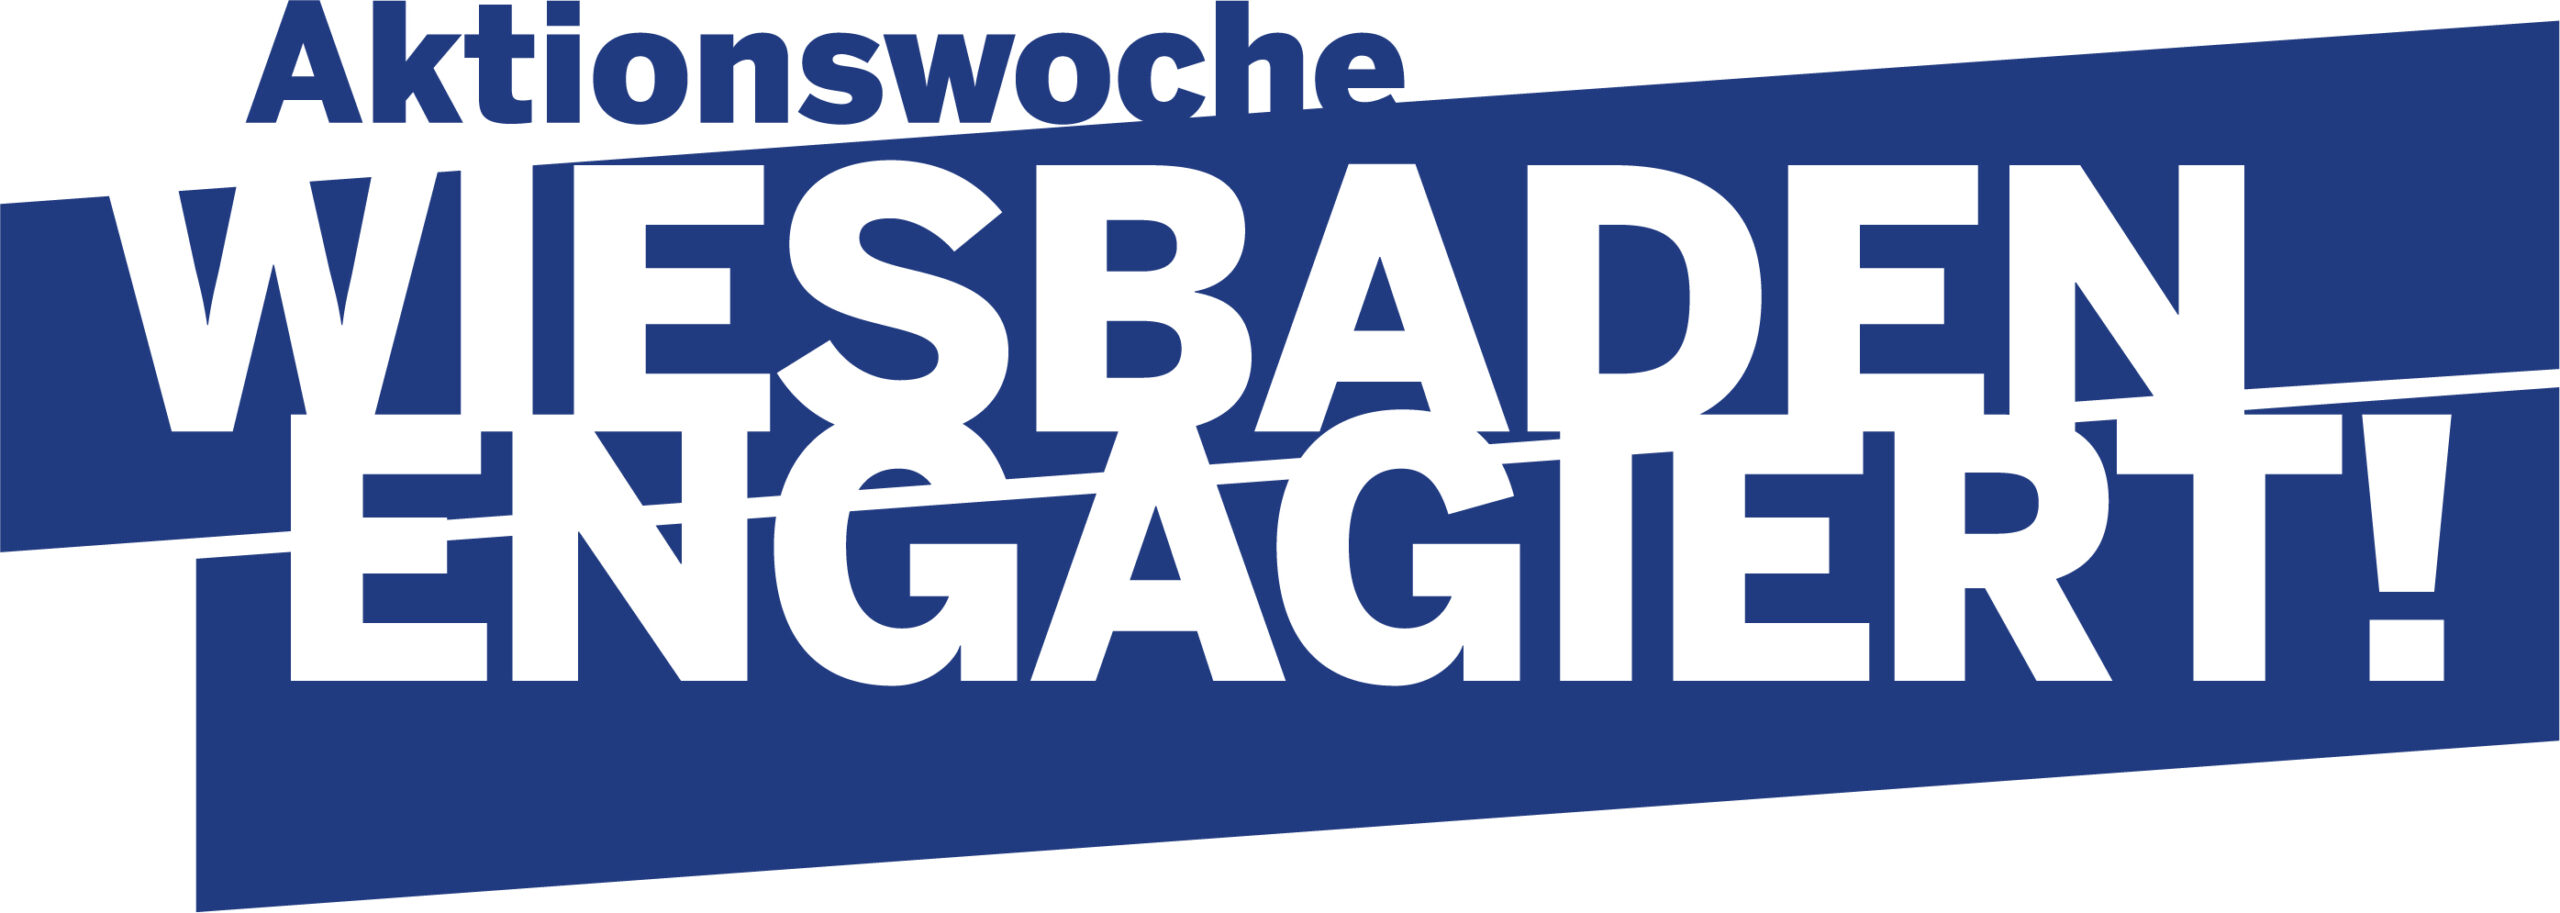 Aktionswoche WIESBADEN ENGAGIERT! Logo